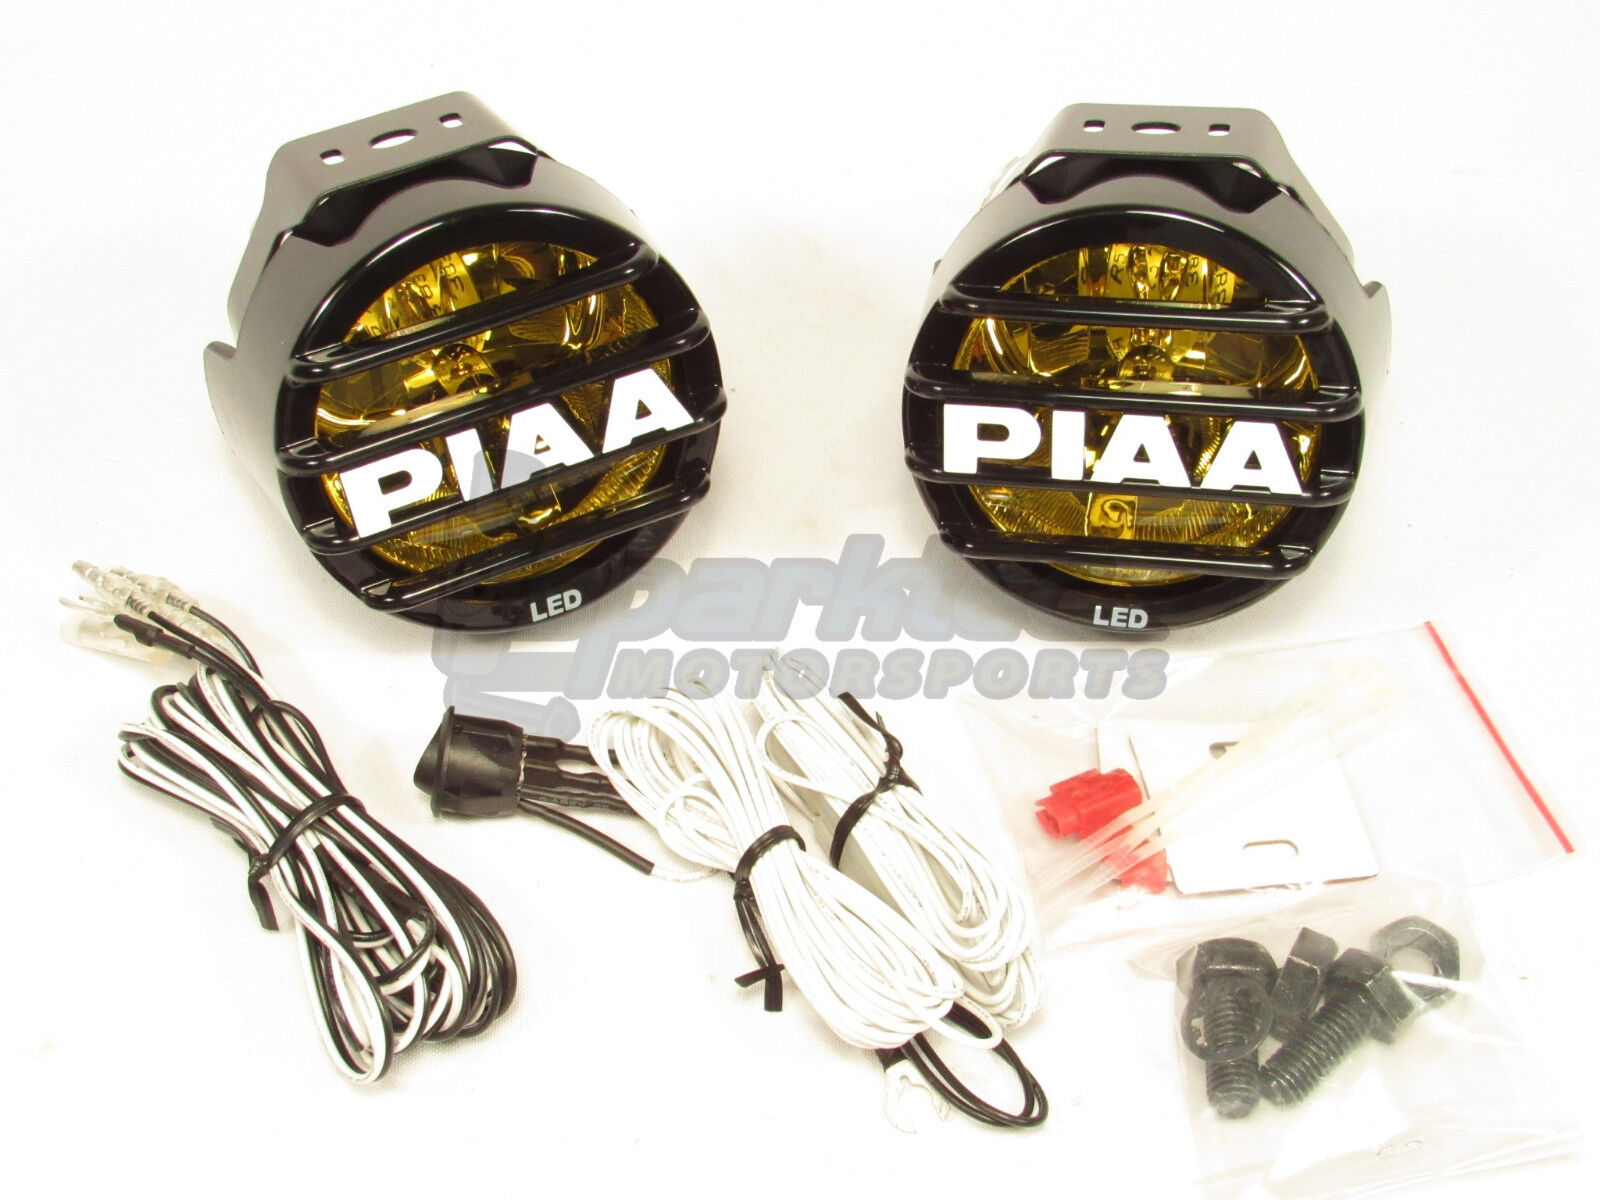 PIAA LP530 LED Ion Yellow Driving Beam Kit Fog Lights Lamp 2500K 9.4W 22-05372